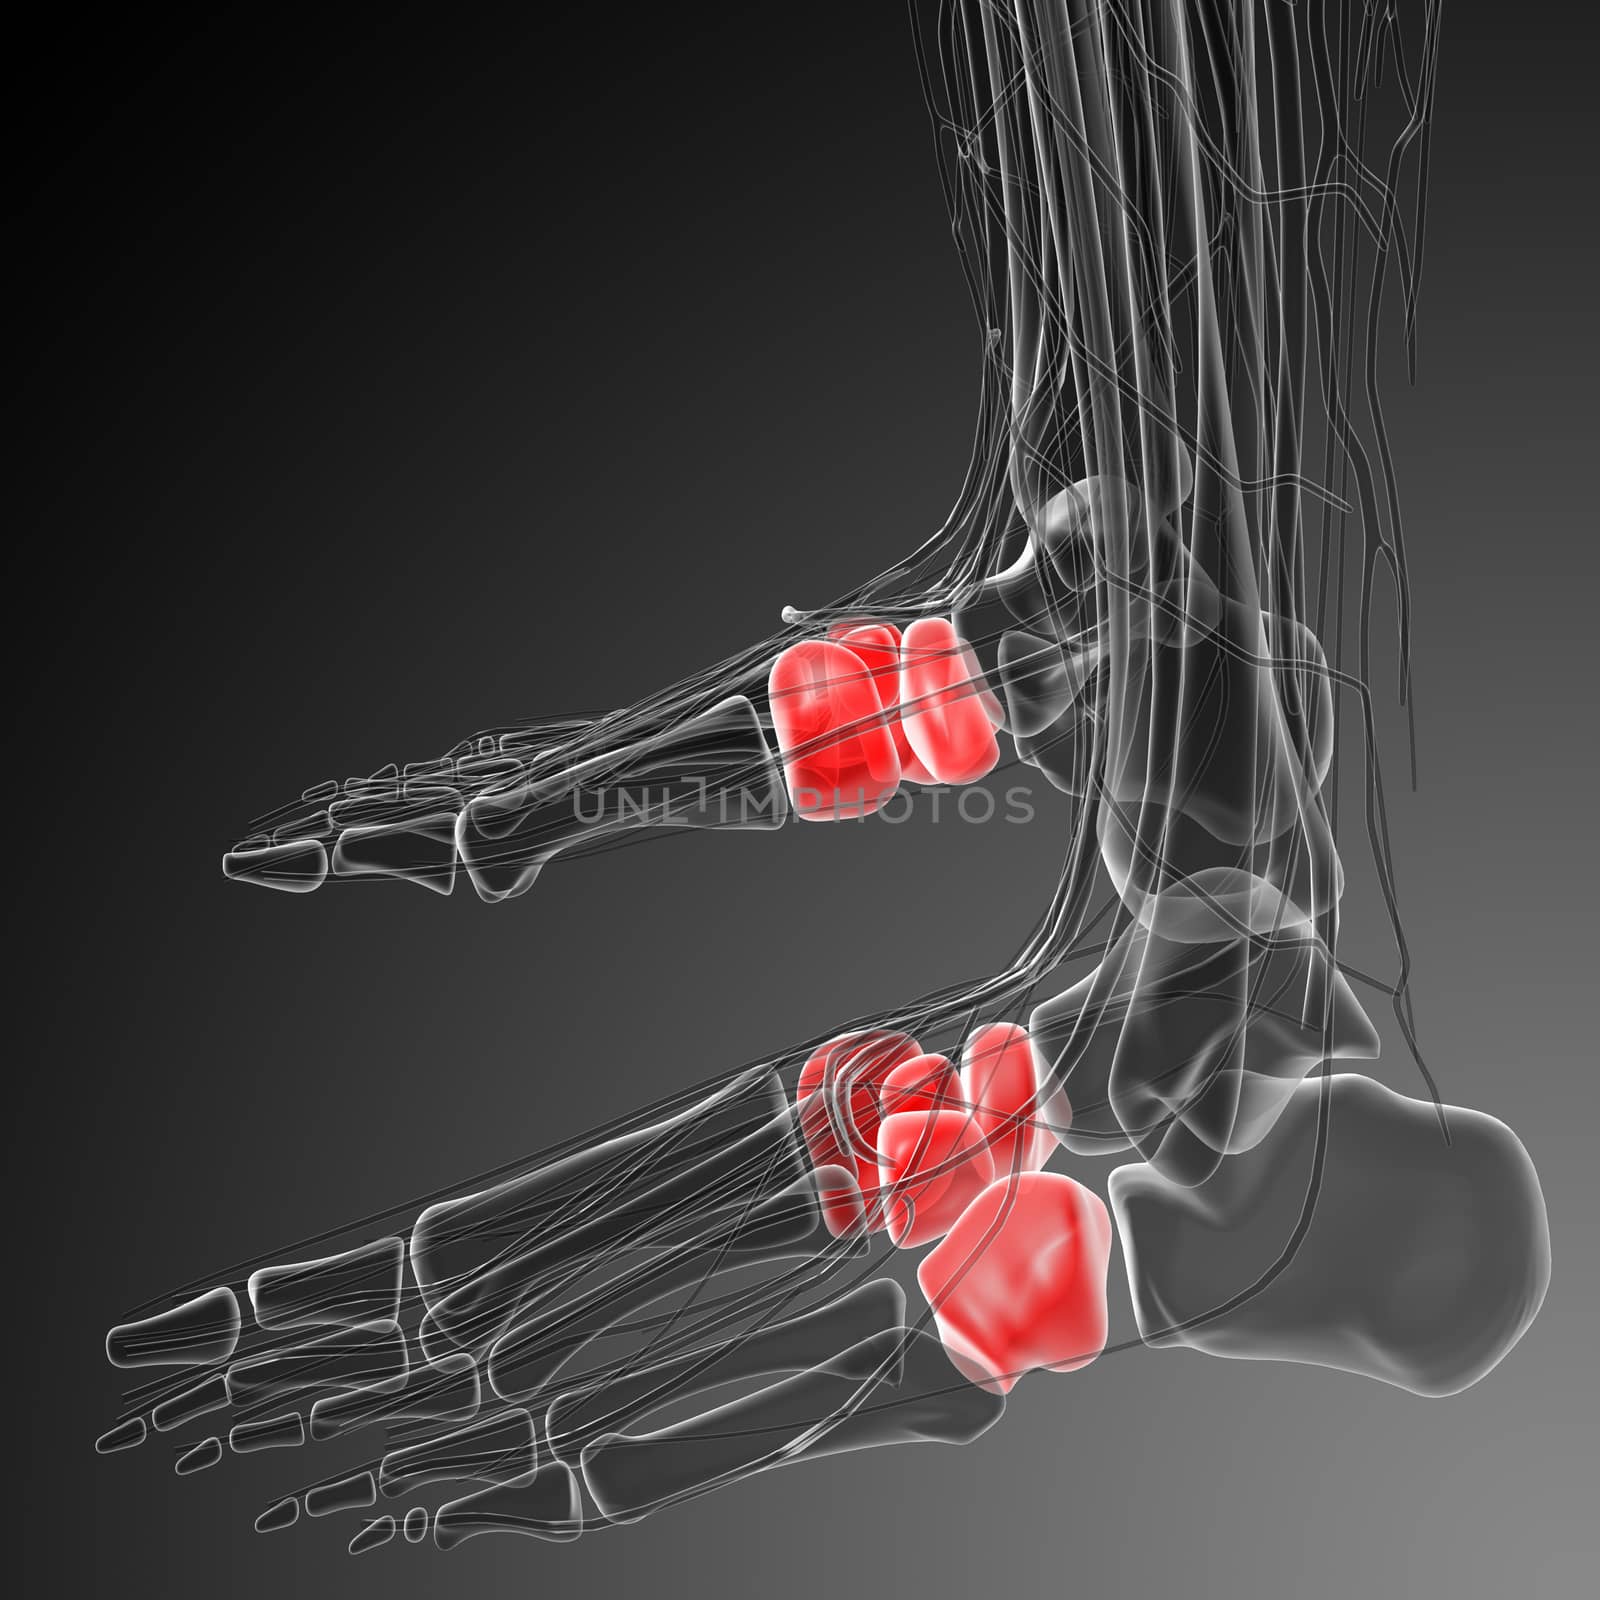 3d render medical illustration of the midfoot bone - side view